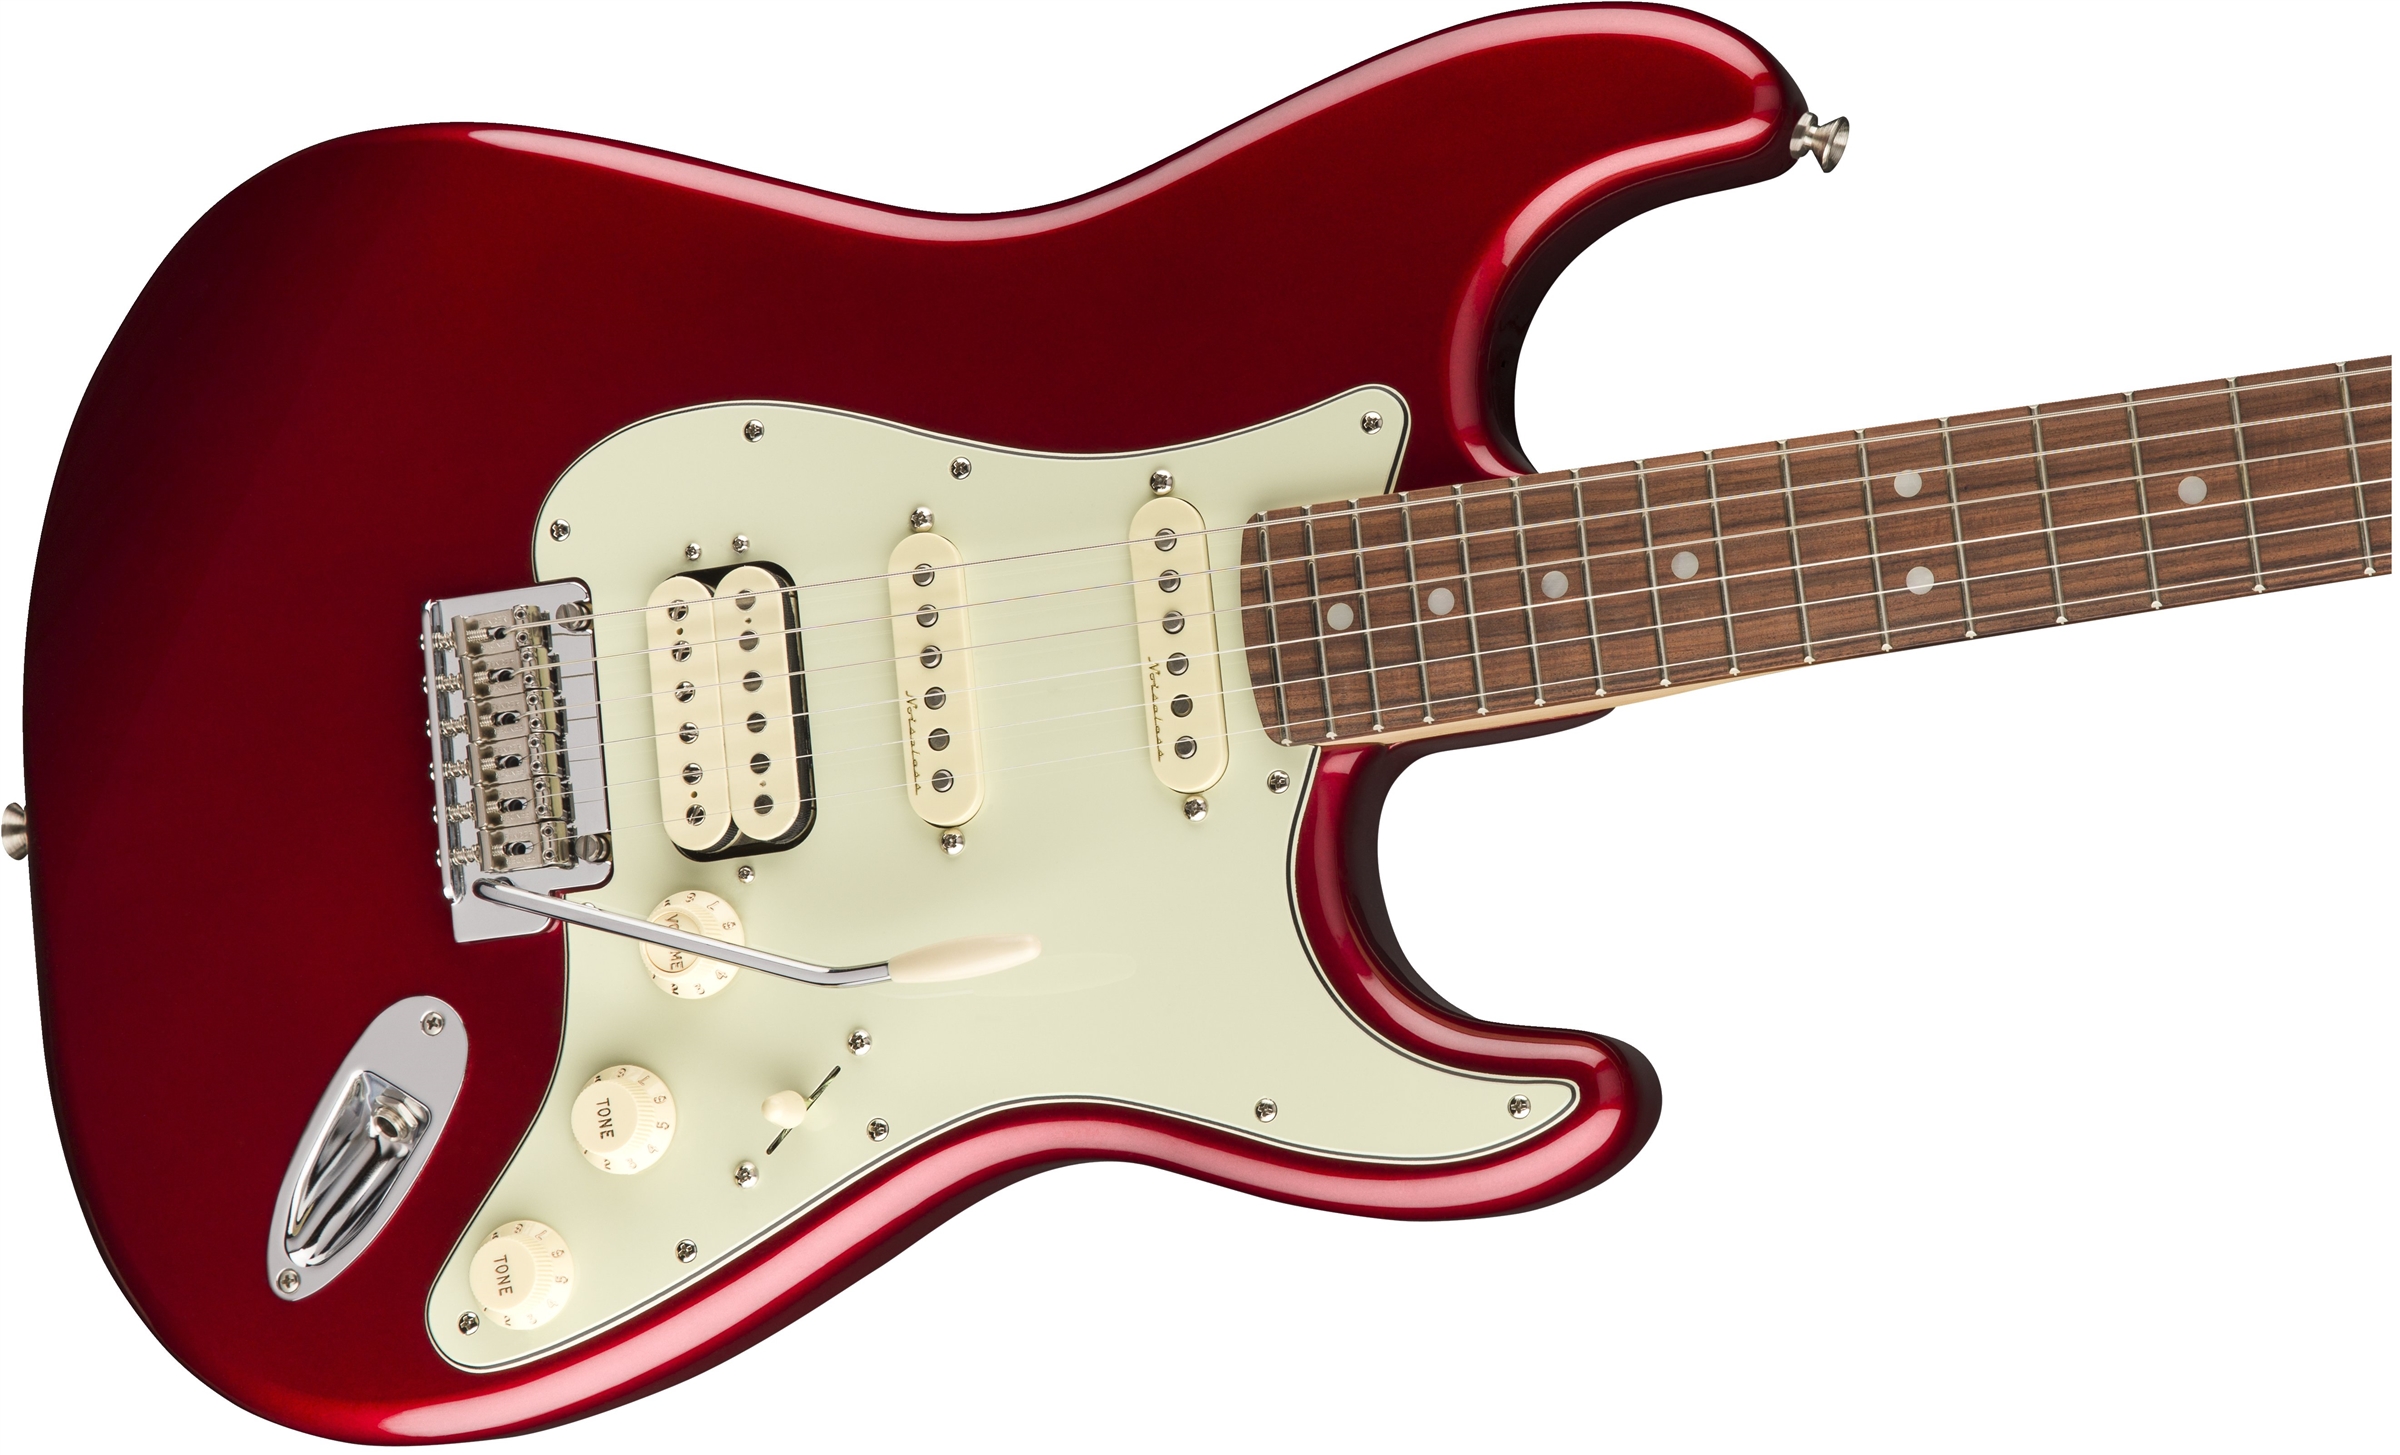 Fender Strat Deluxe Hss Mex Pf 2017 - Candy Apple Red - Guitare Électrique Forme Str - Variation 2